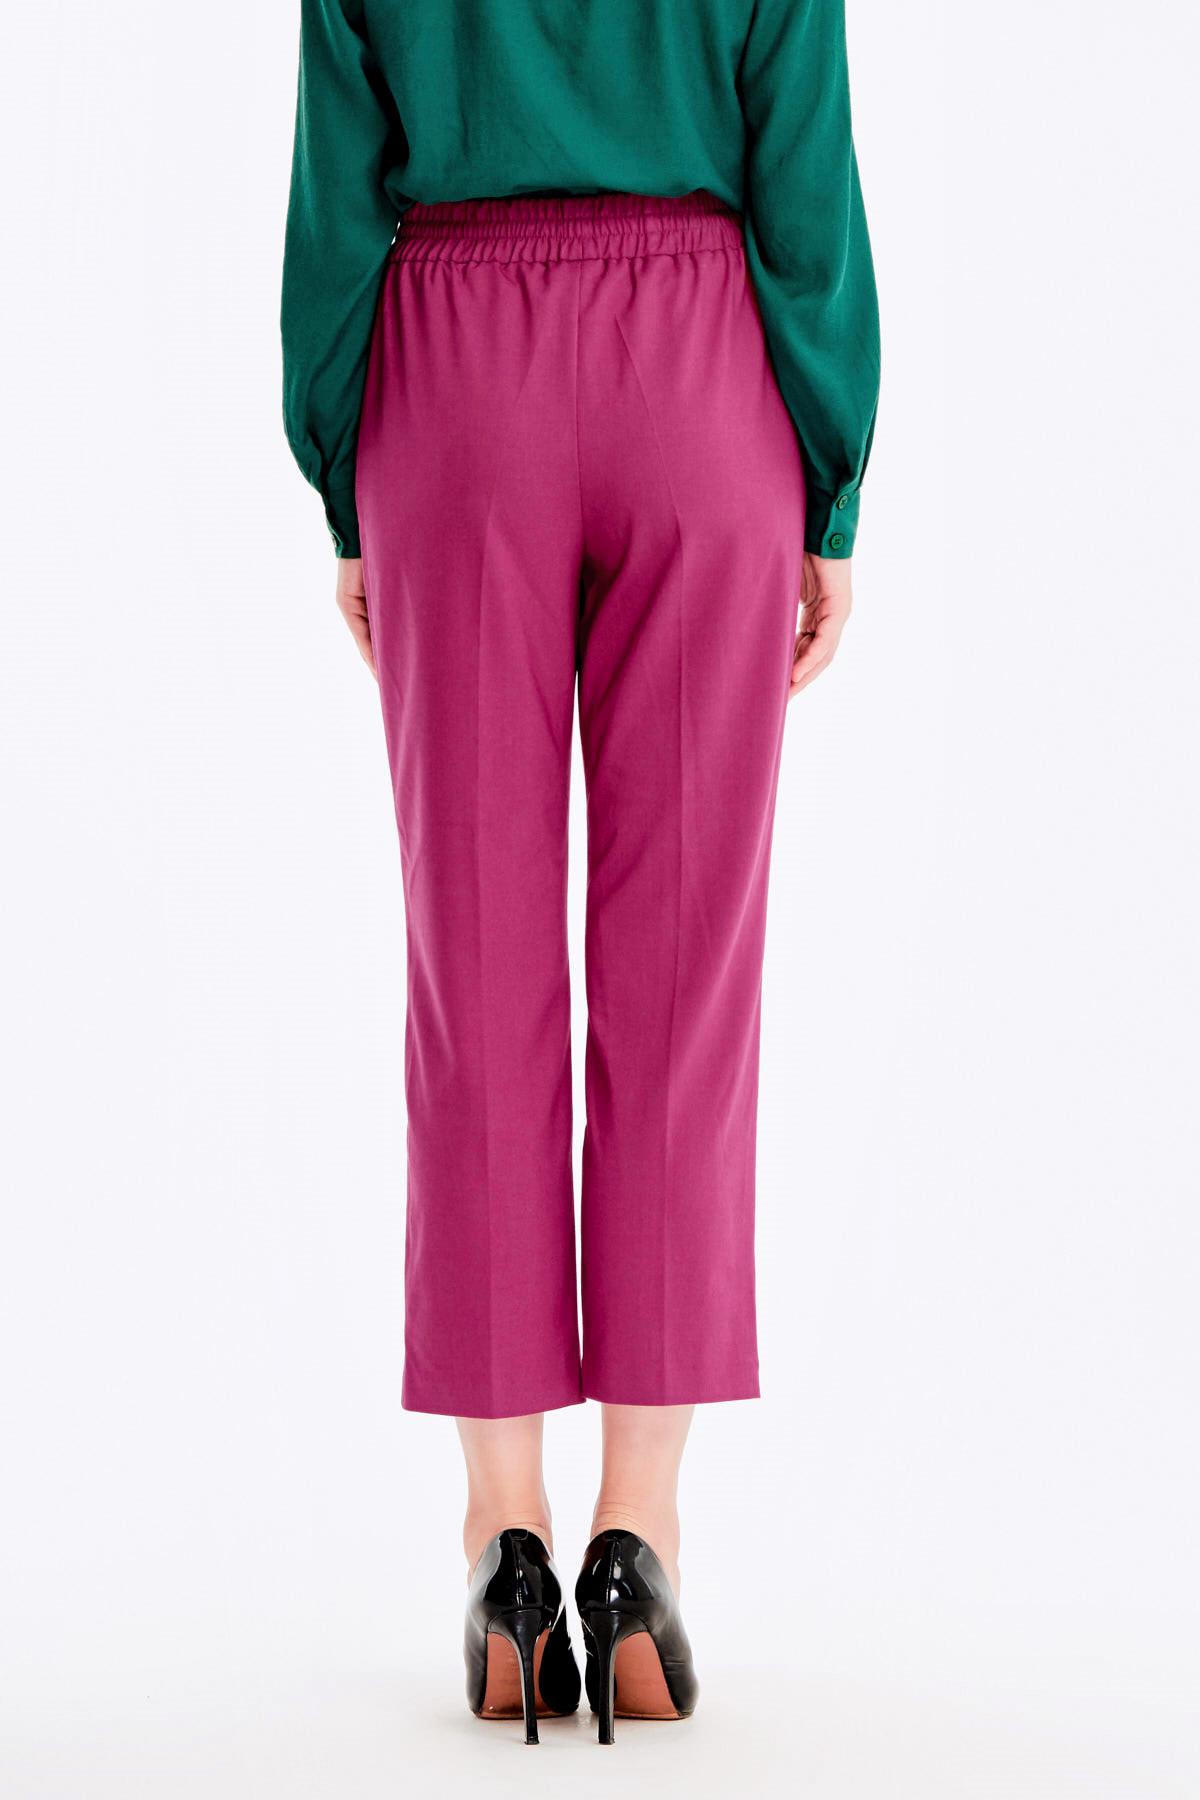 Fuschia trousers with an elastic waistband, photo 5